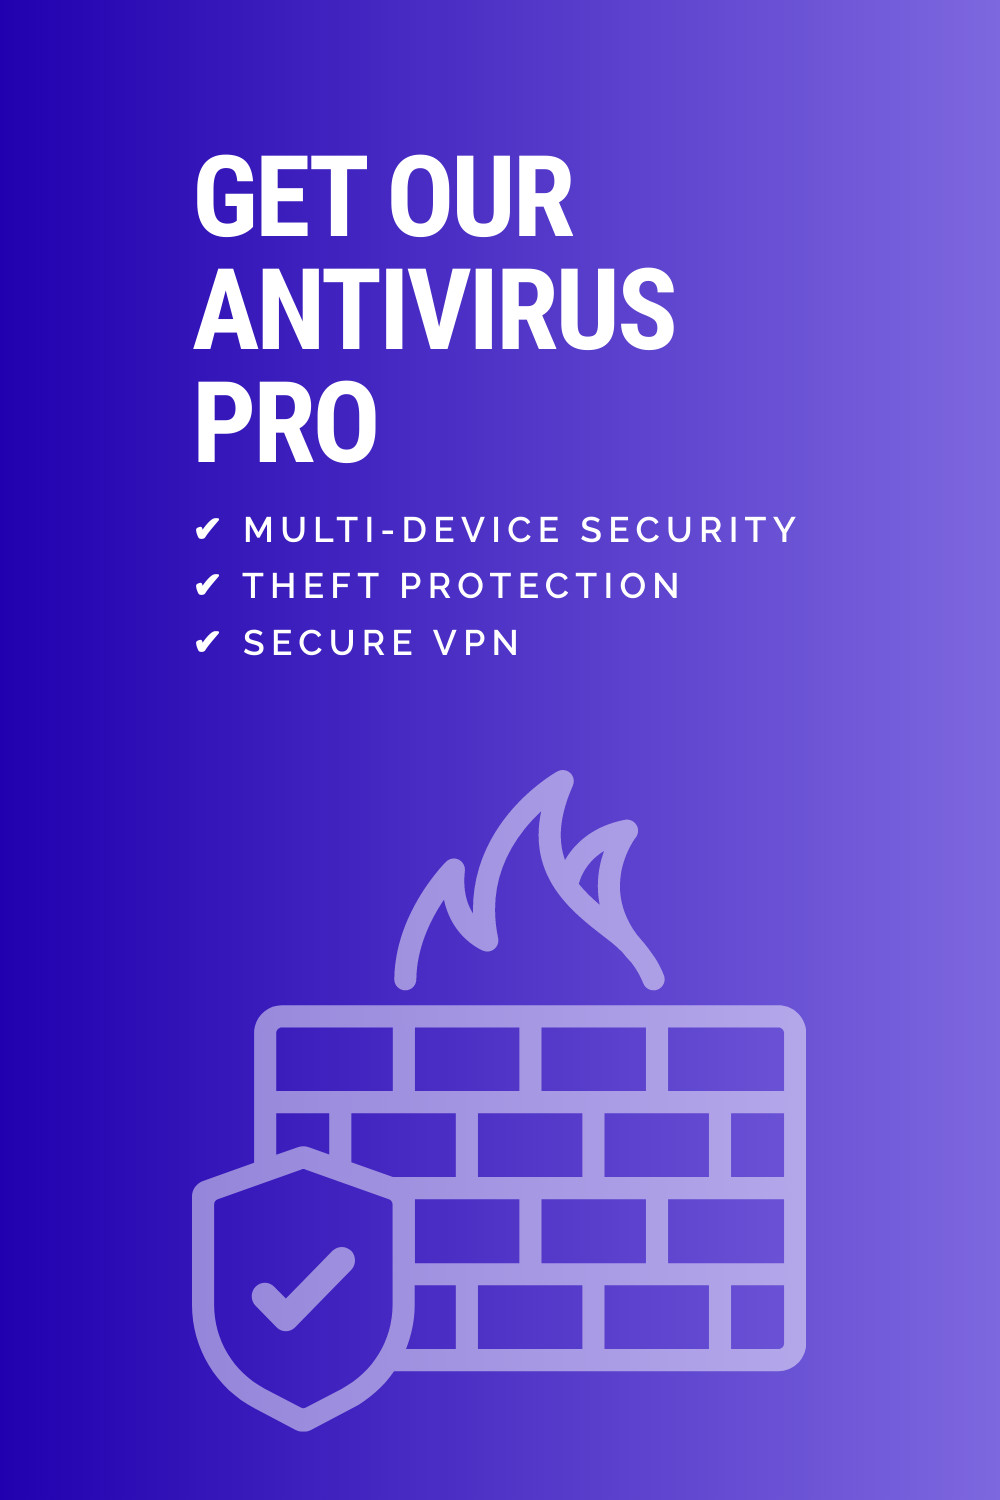 Antivirus Pro Firewall and Security